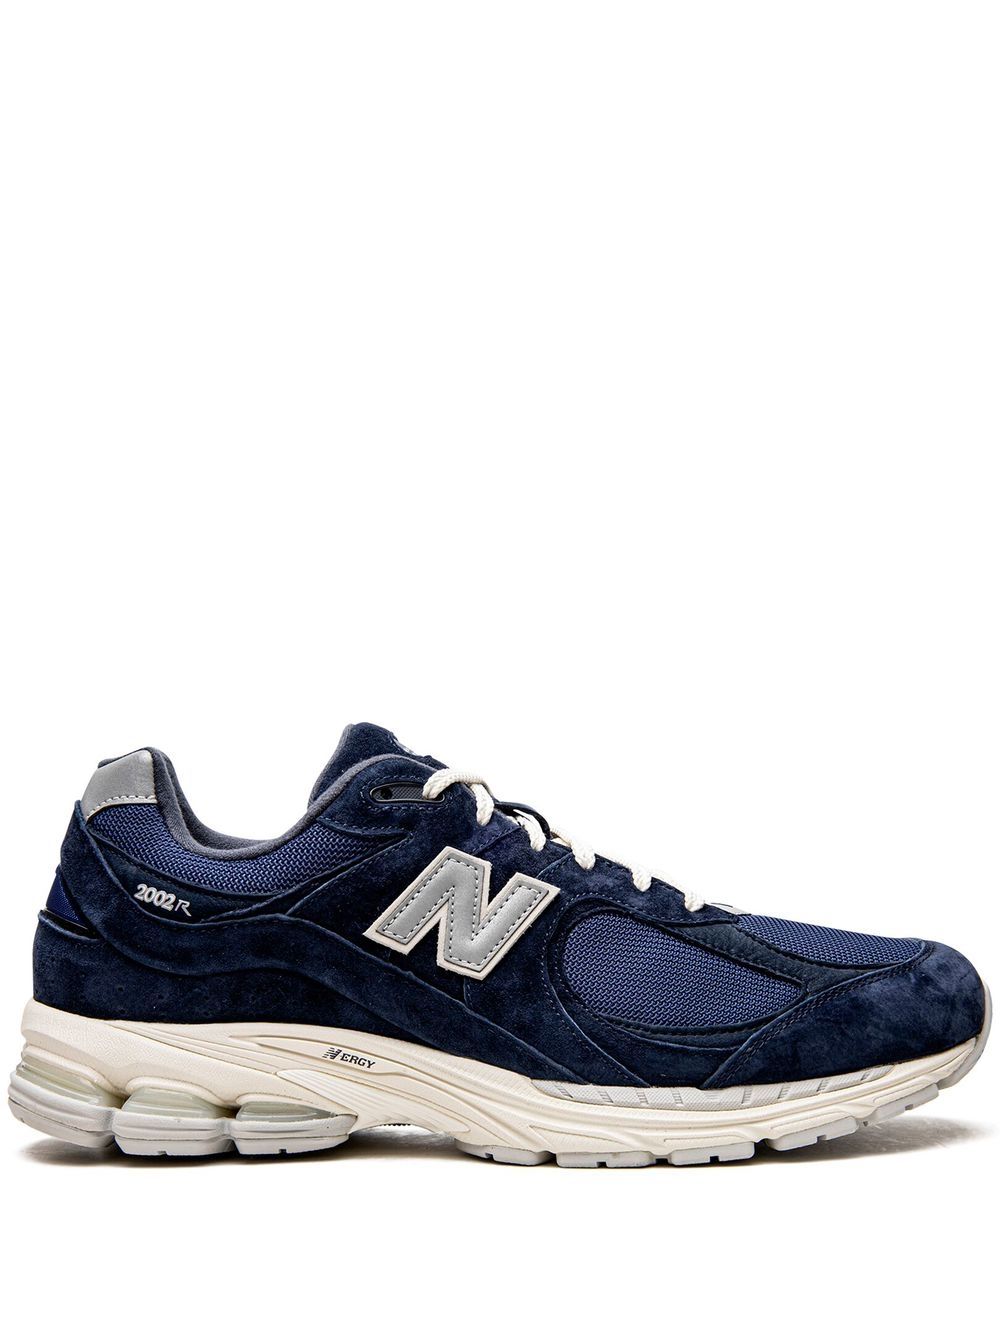 New Balance 2002R "Natural Indigo" sneakers - Blue